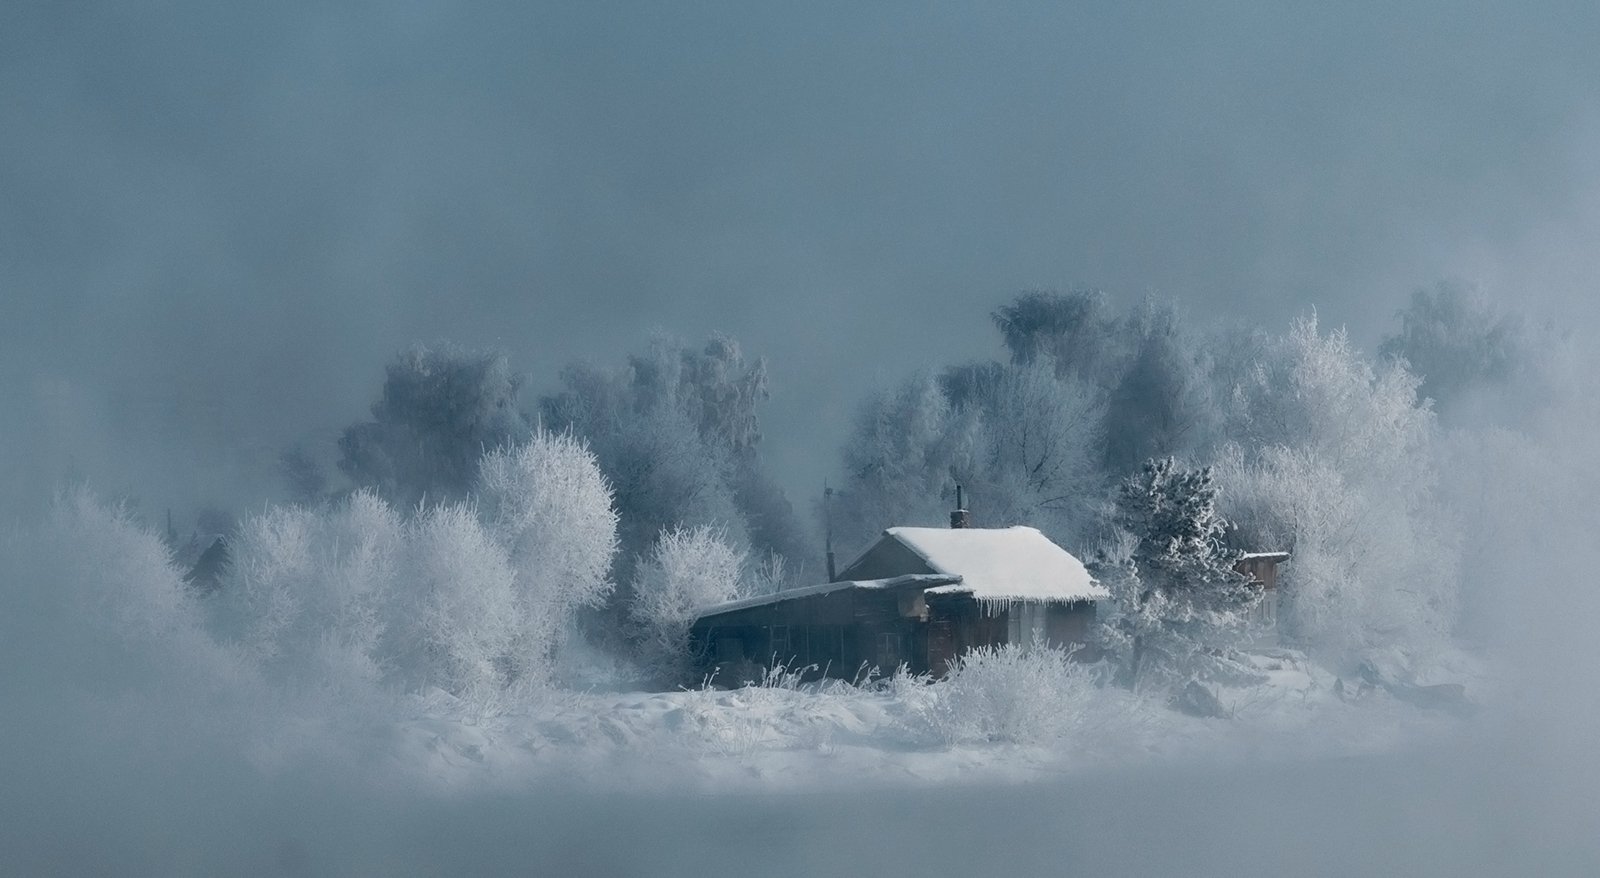 ангара зима зимний дом мороз иней куржак, Андрей Таничев